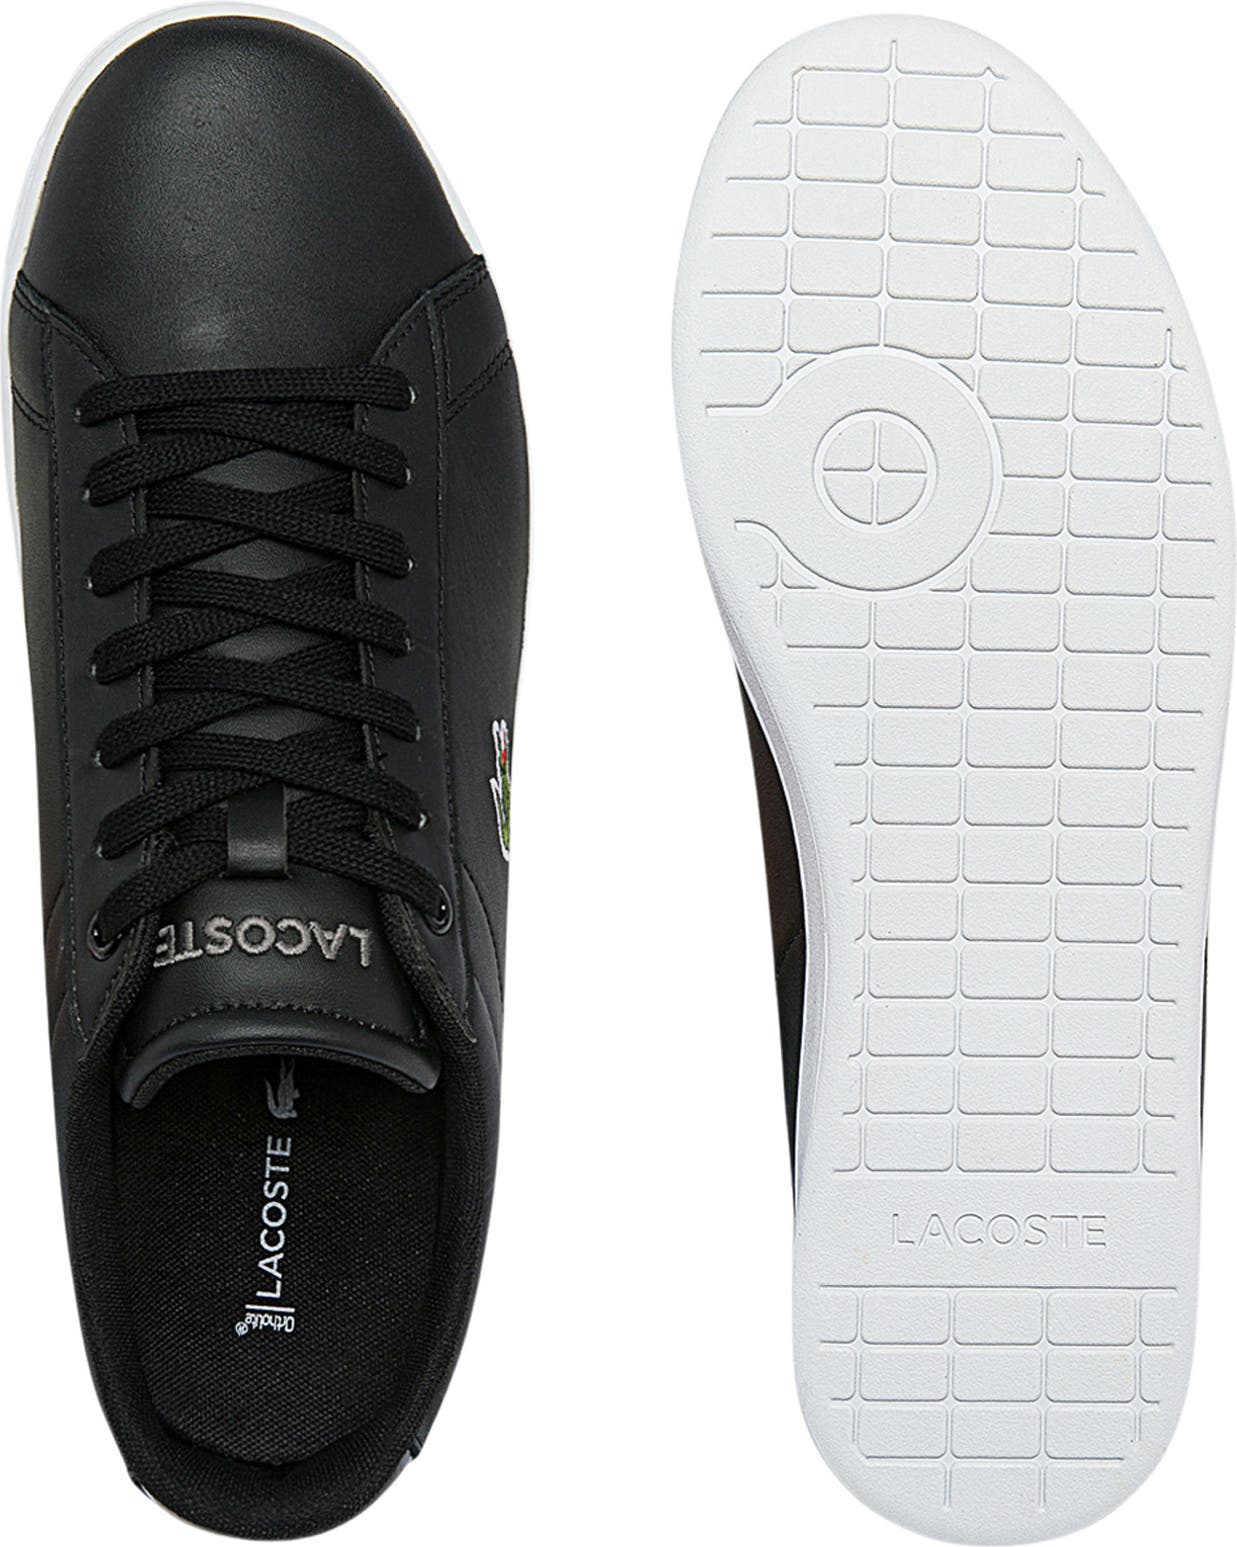 LACOSTE Carnaby Sneaker, Alternate, color, BLACK/WHITE